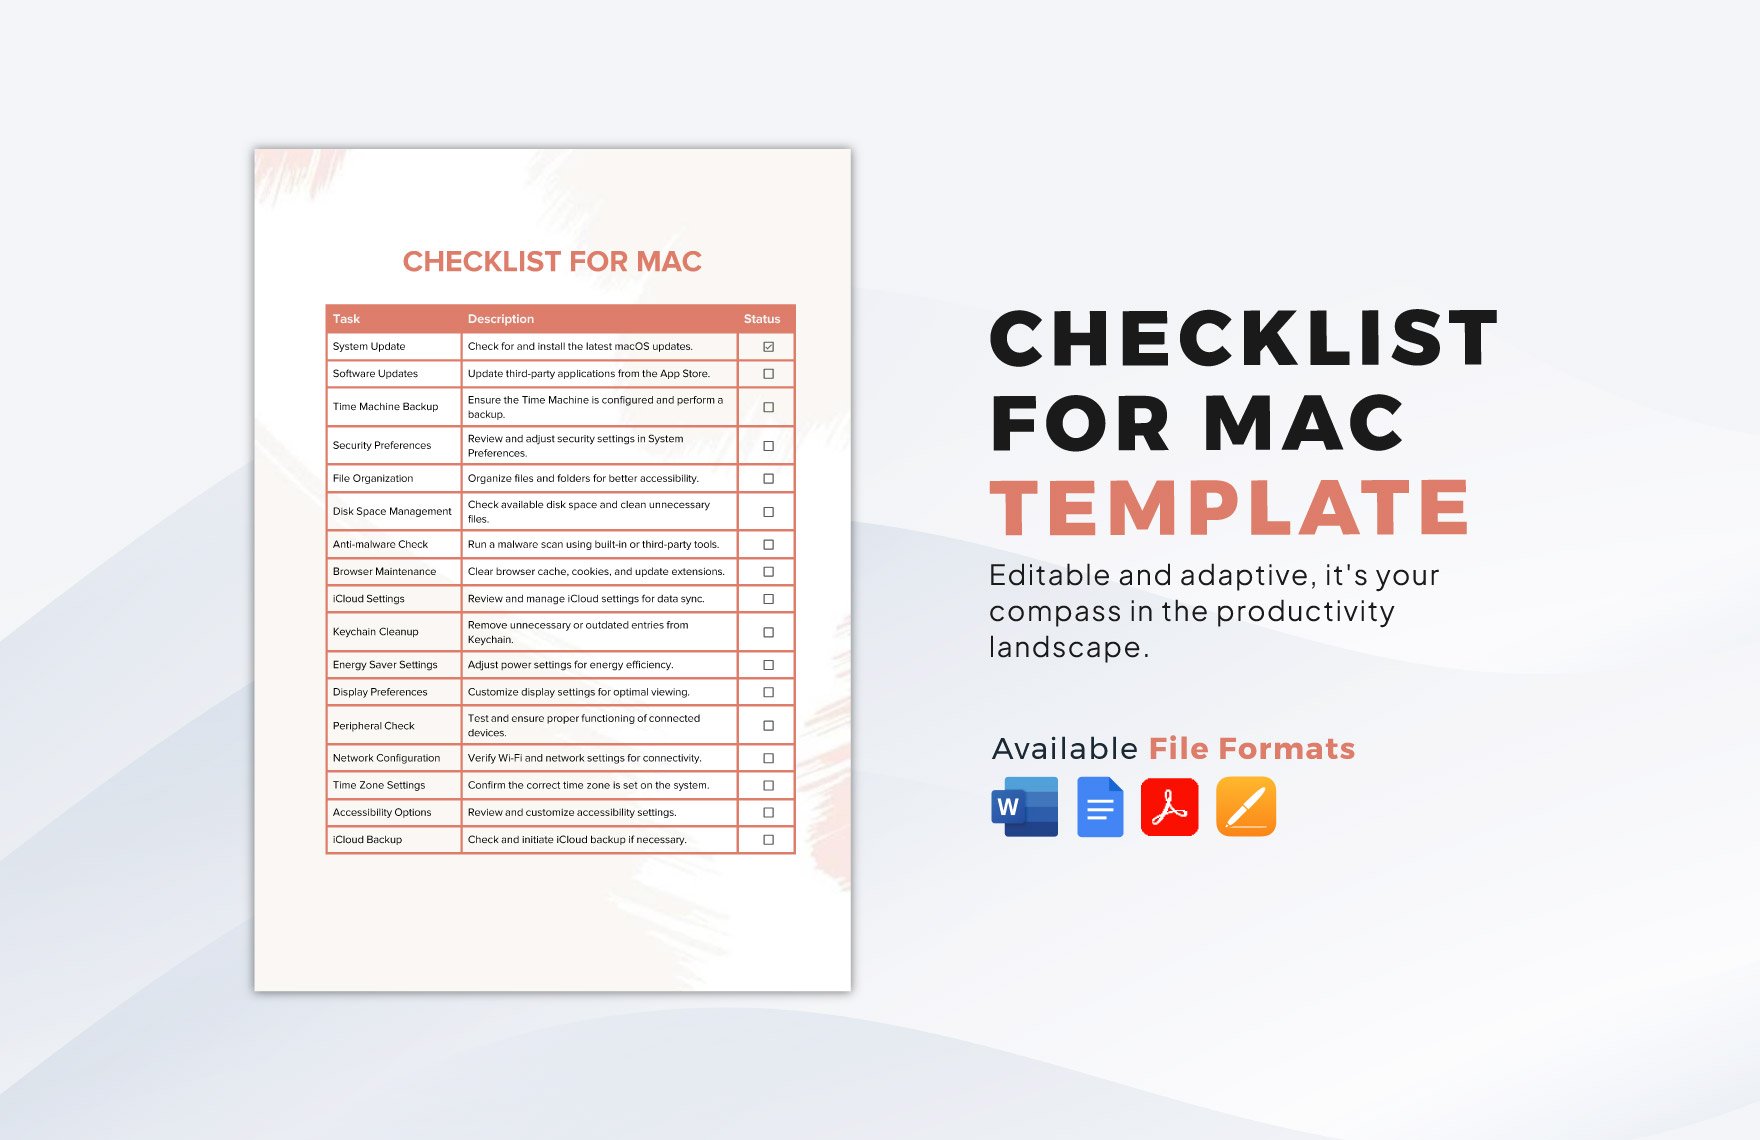 Checklist for Mac Template